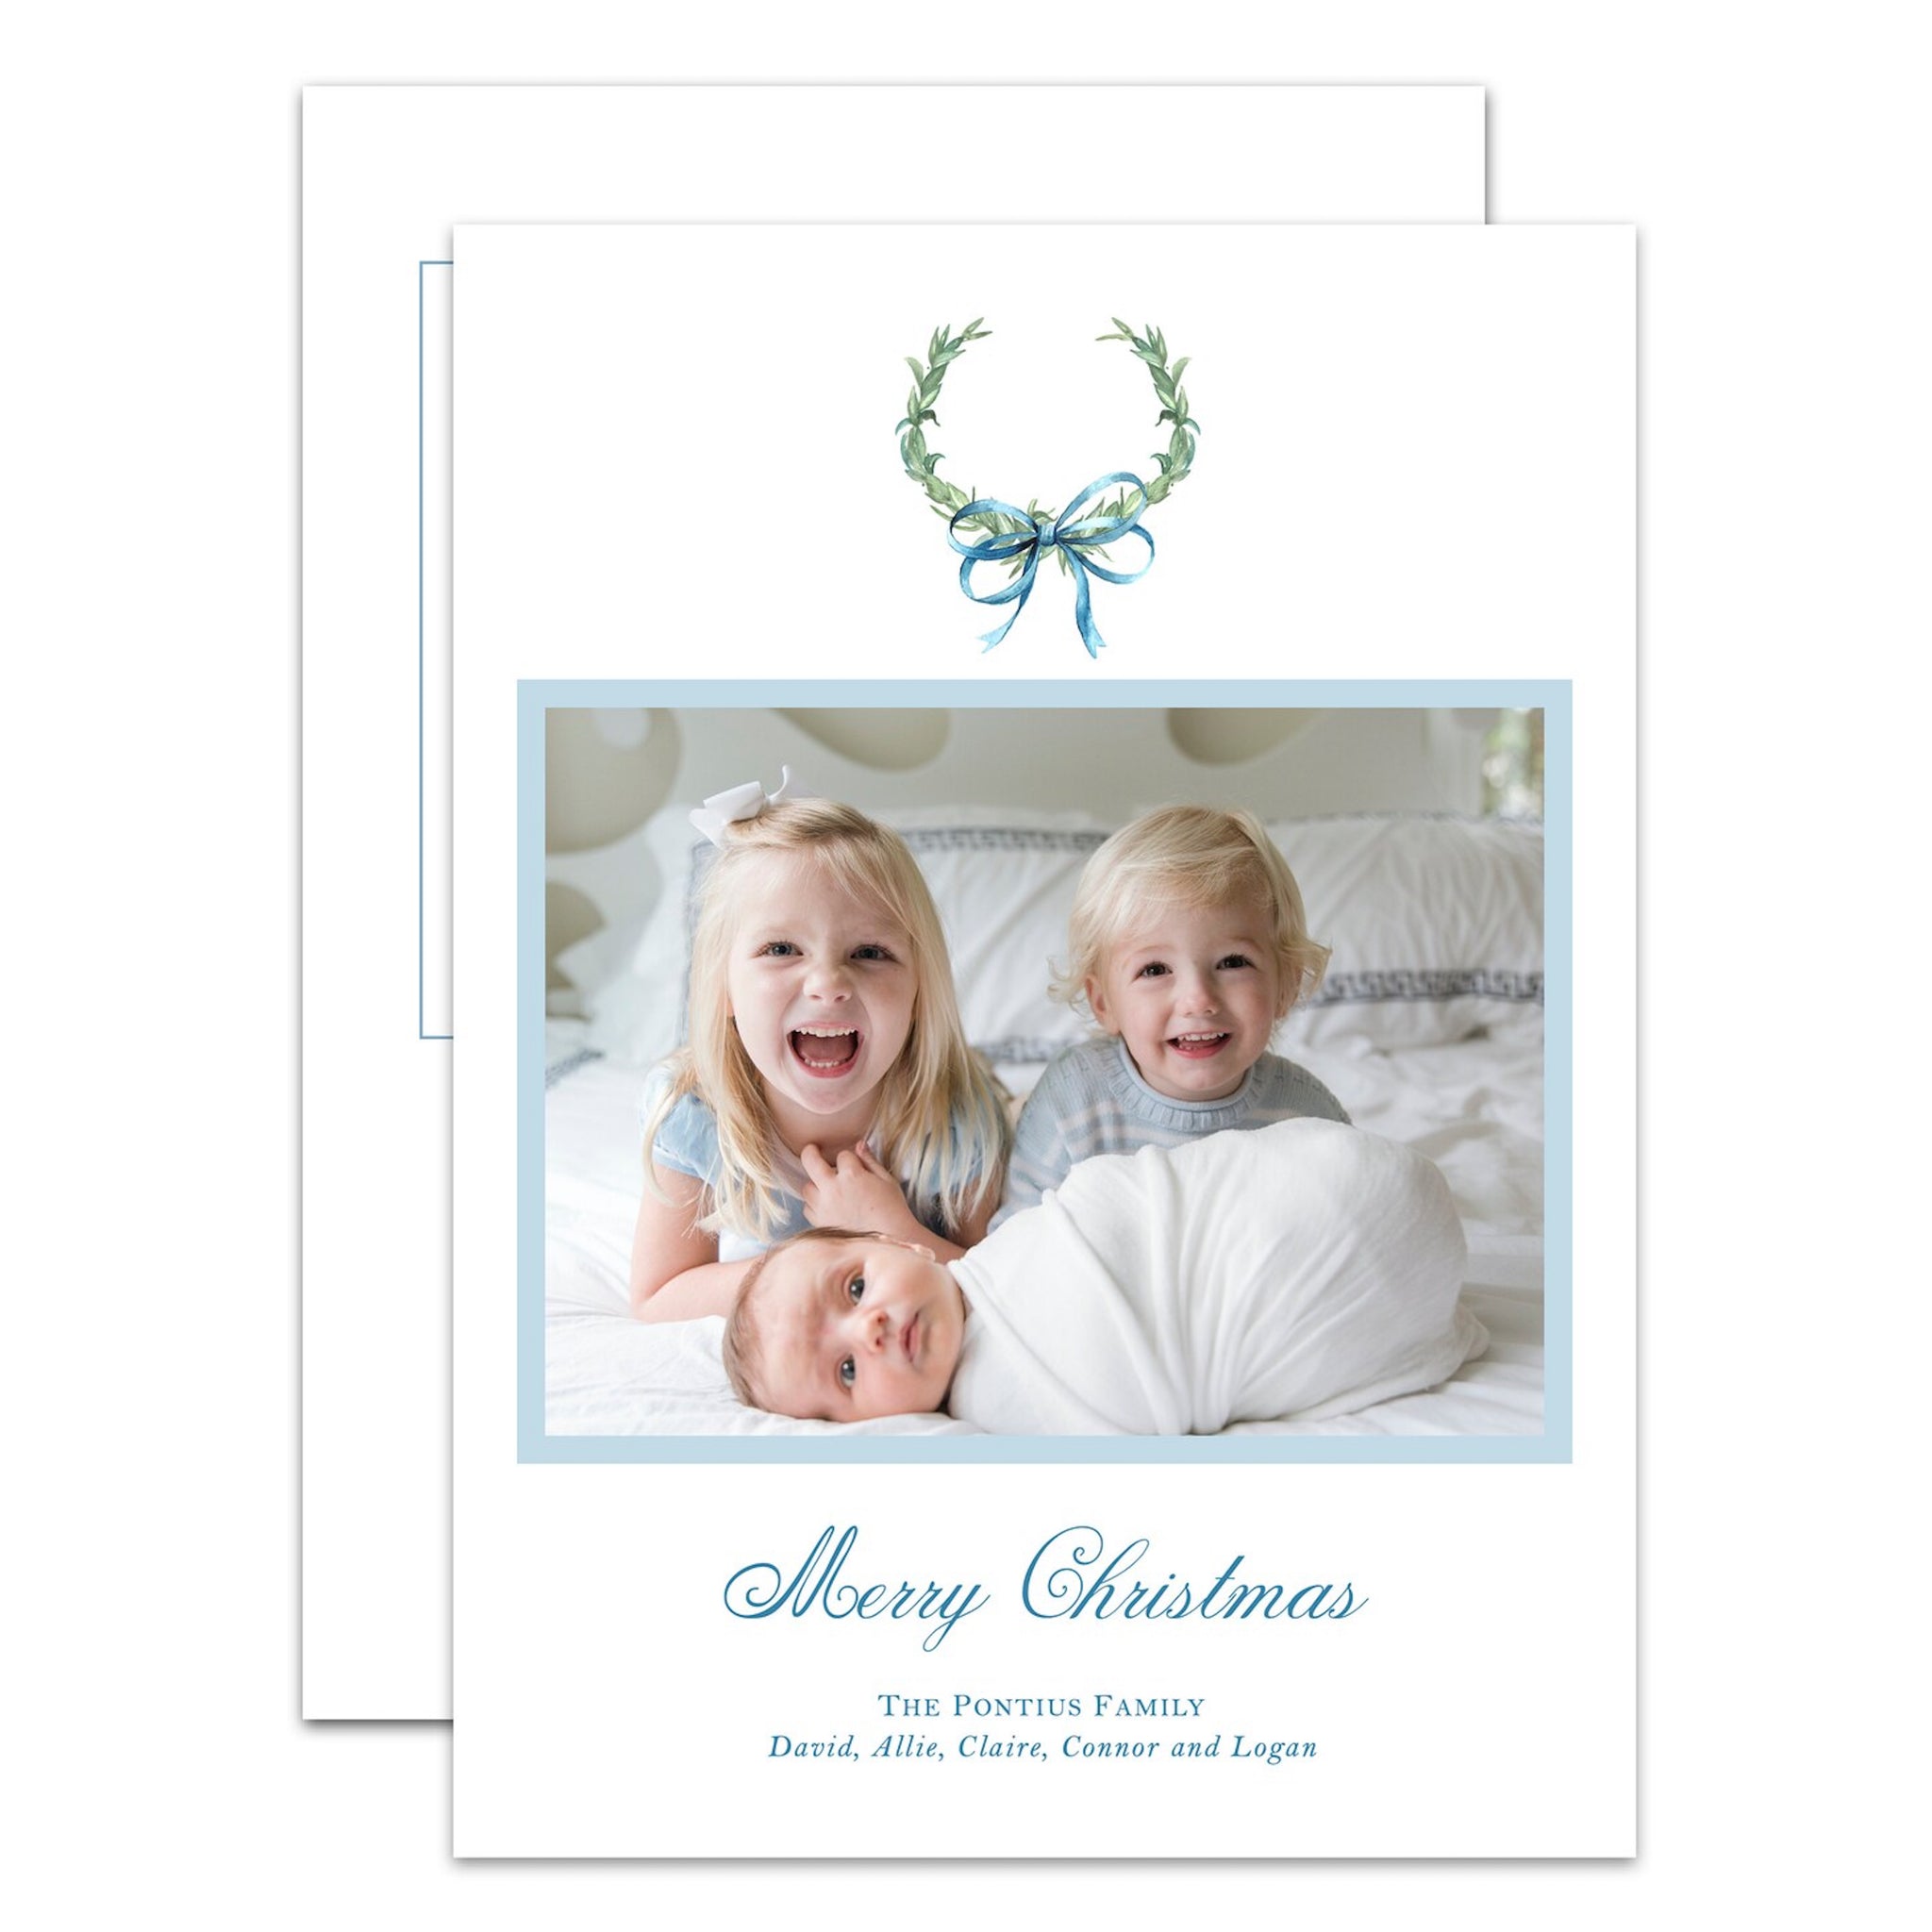 Blue Ribbon Wreath Holiday Card / Birth Announcement